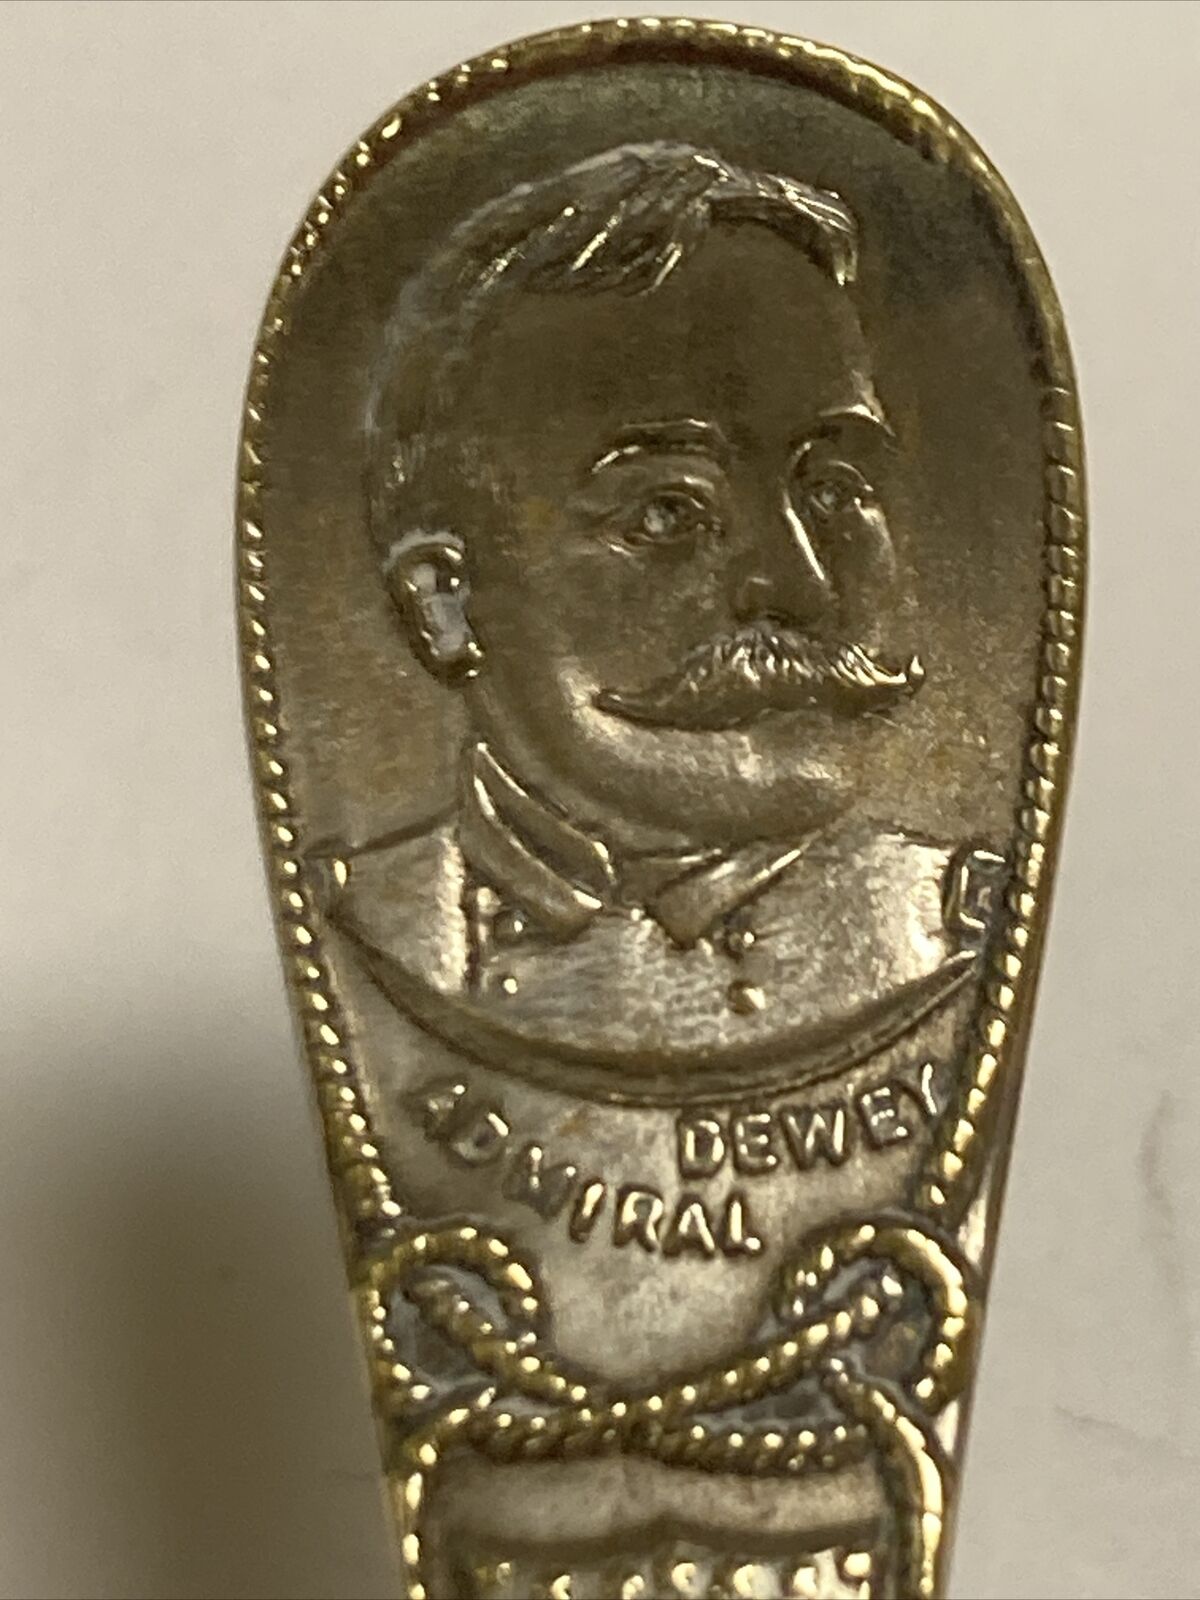 Admiral Dewey Flagship Olympia Vintage Souvenir Spoon Collectible